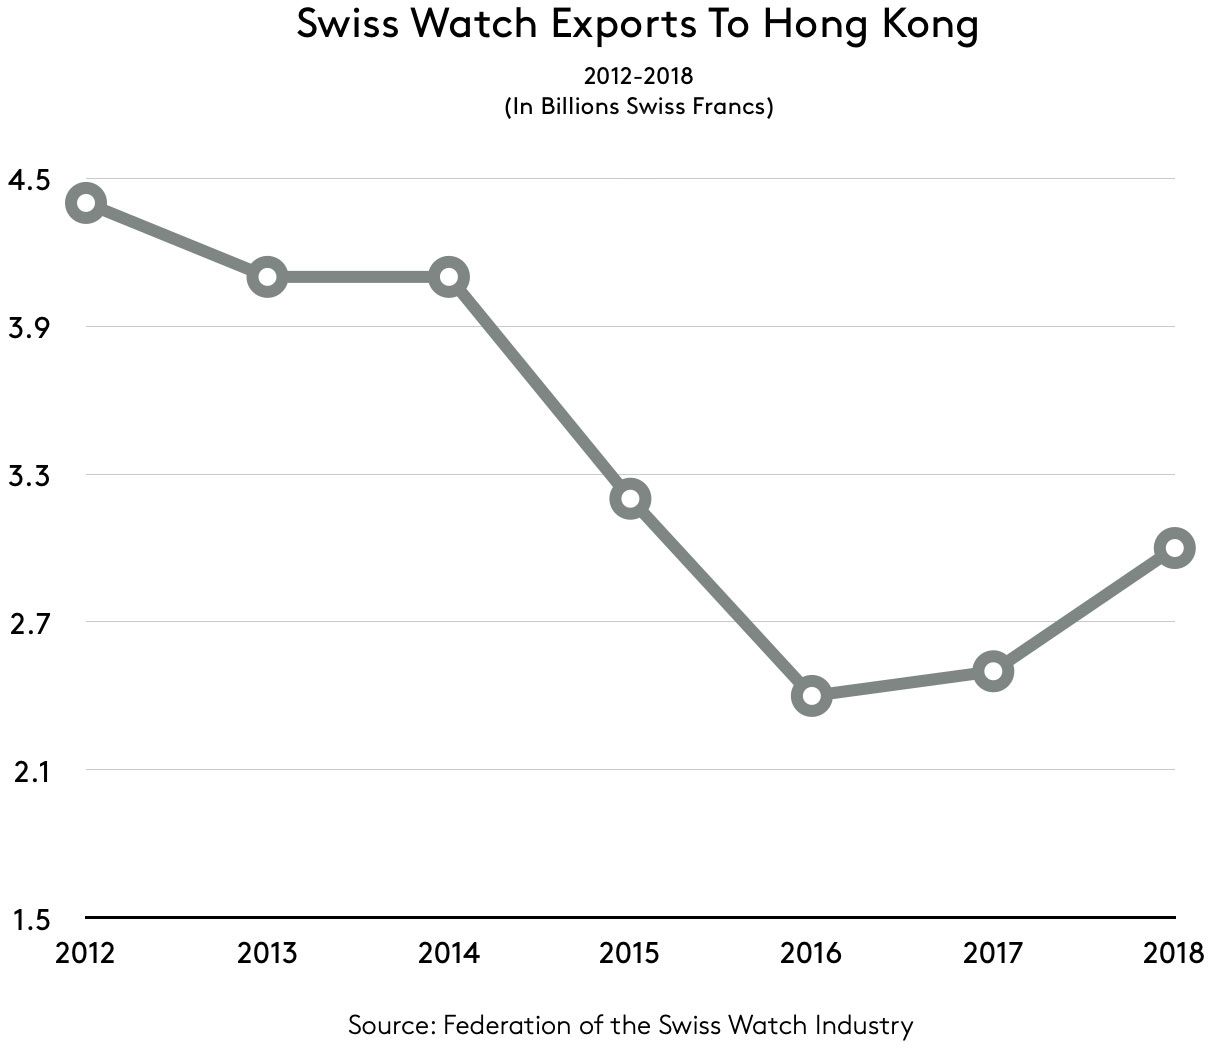  swiss watch export to Hong Kong 2012 to 2018